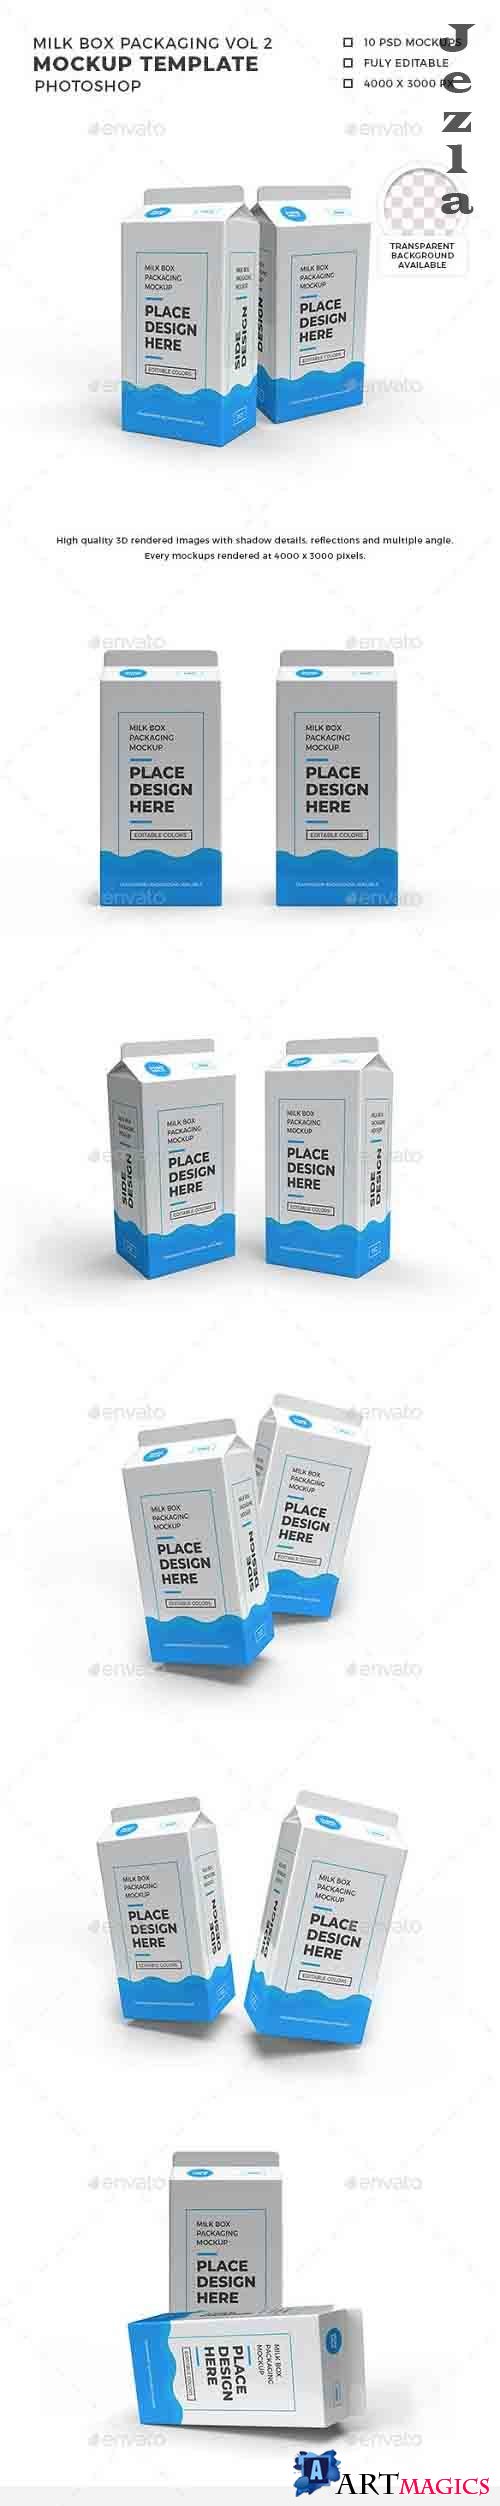 Milk Box Packaging Mockup Template Vol 2 - 32535869